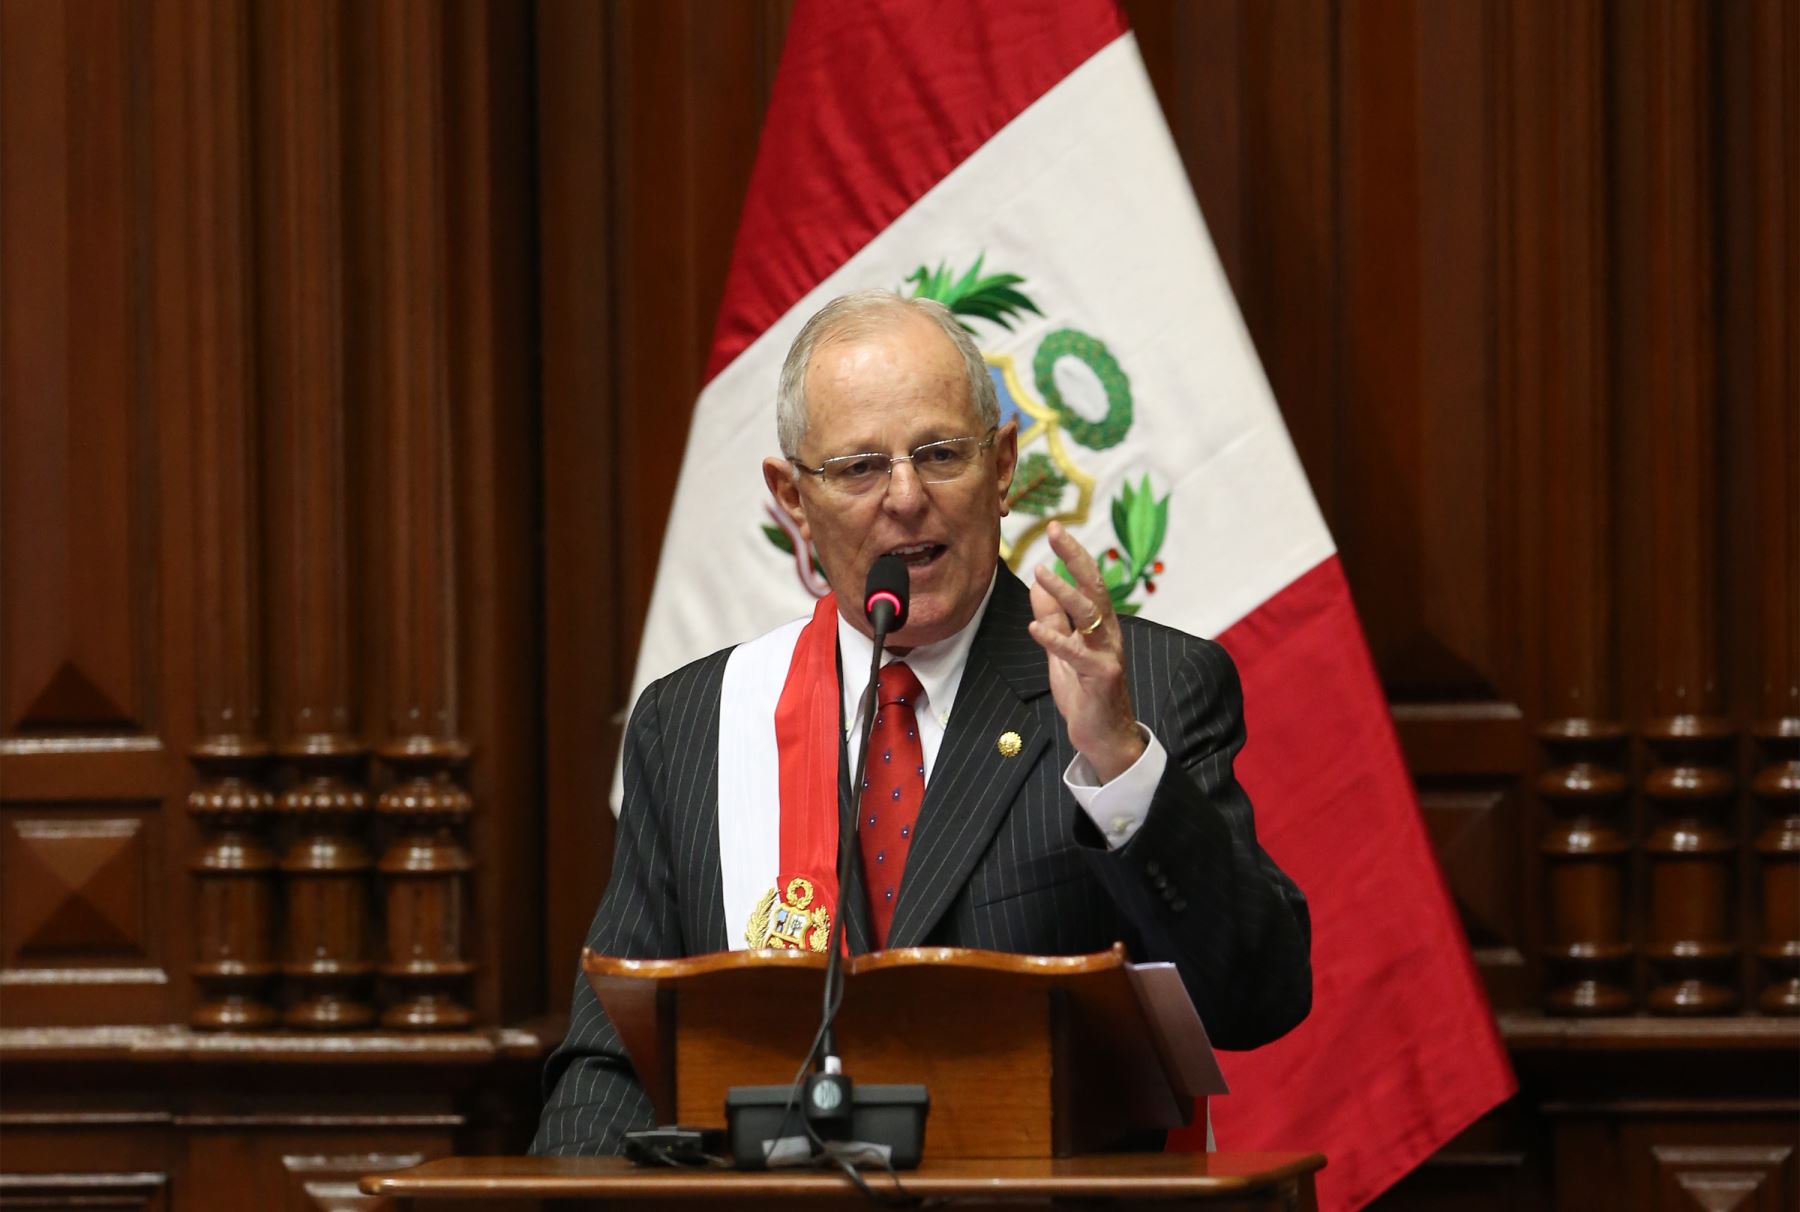 Kuczynski outlines plan for Peru in inaugural address